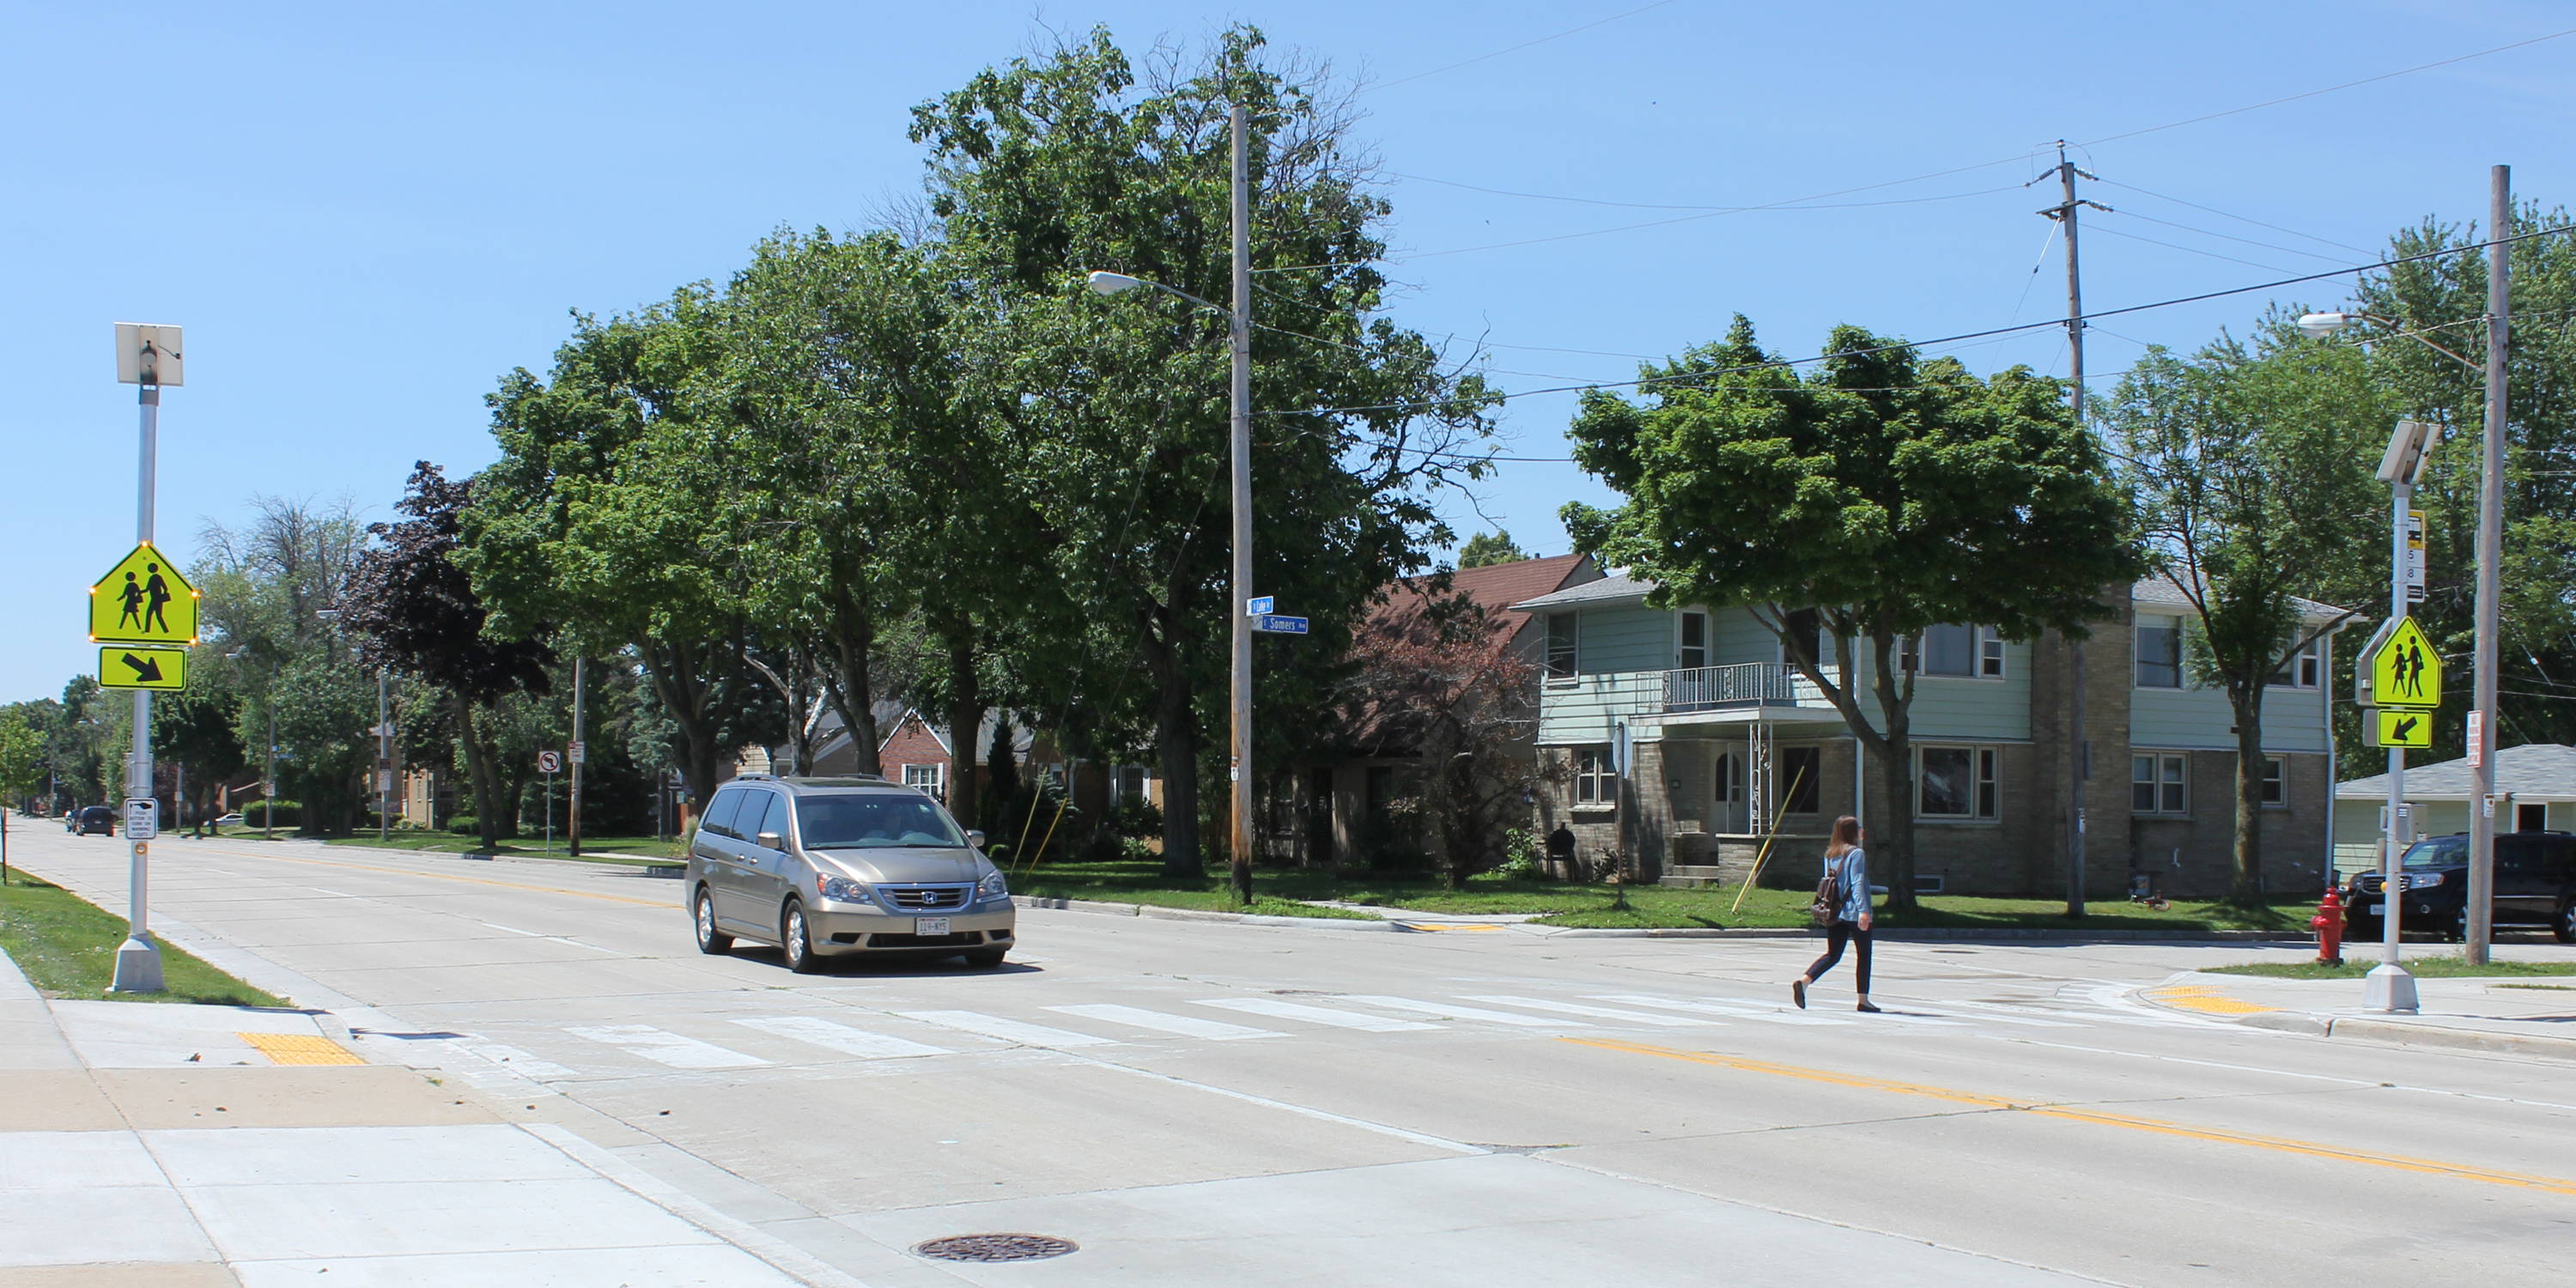 School zone crosswalk with pedestrian and car.